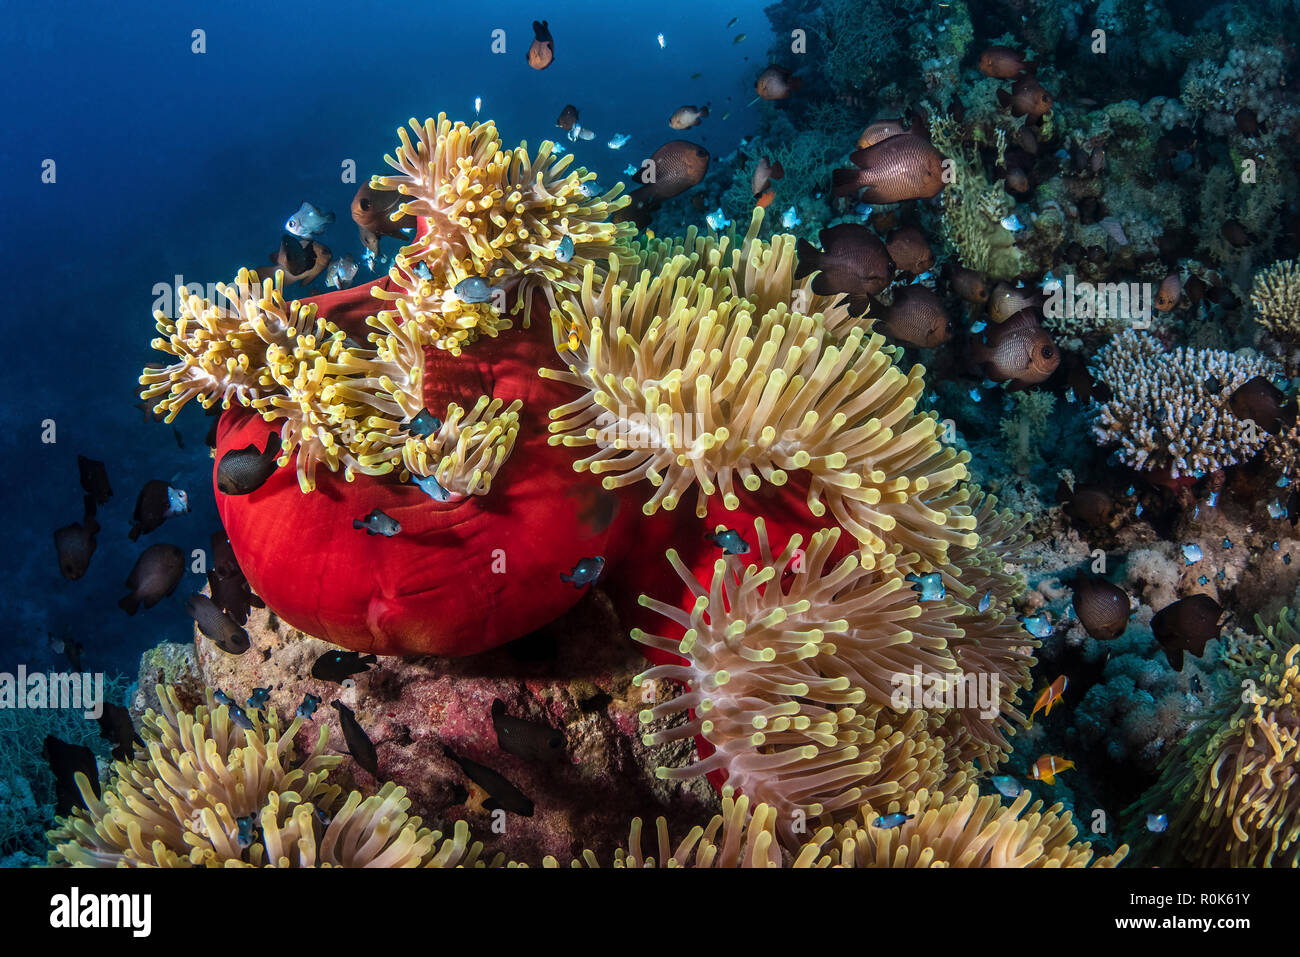 A colony of damsel fish inhabit a sea anemone. Stock Photo